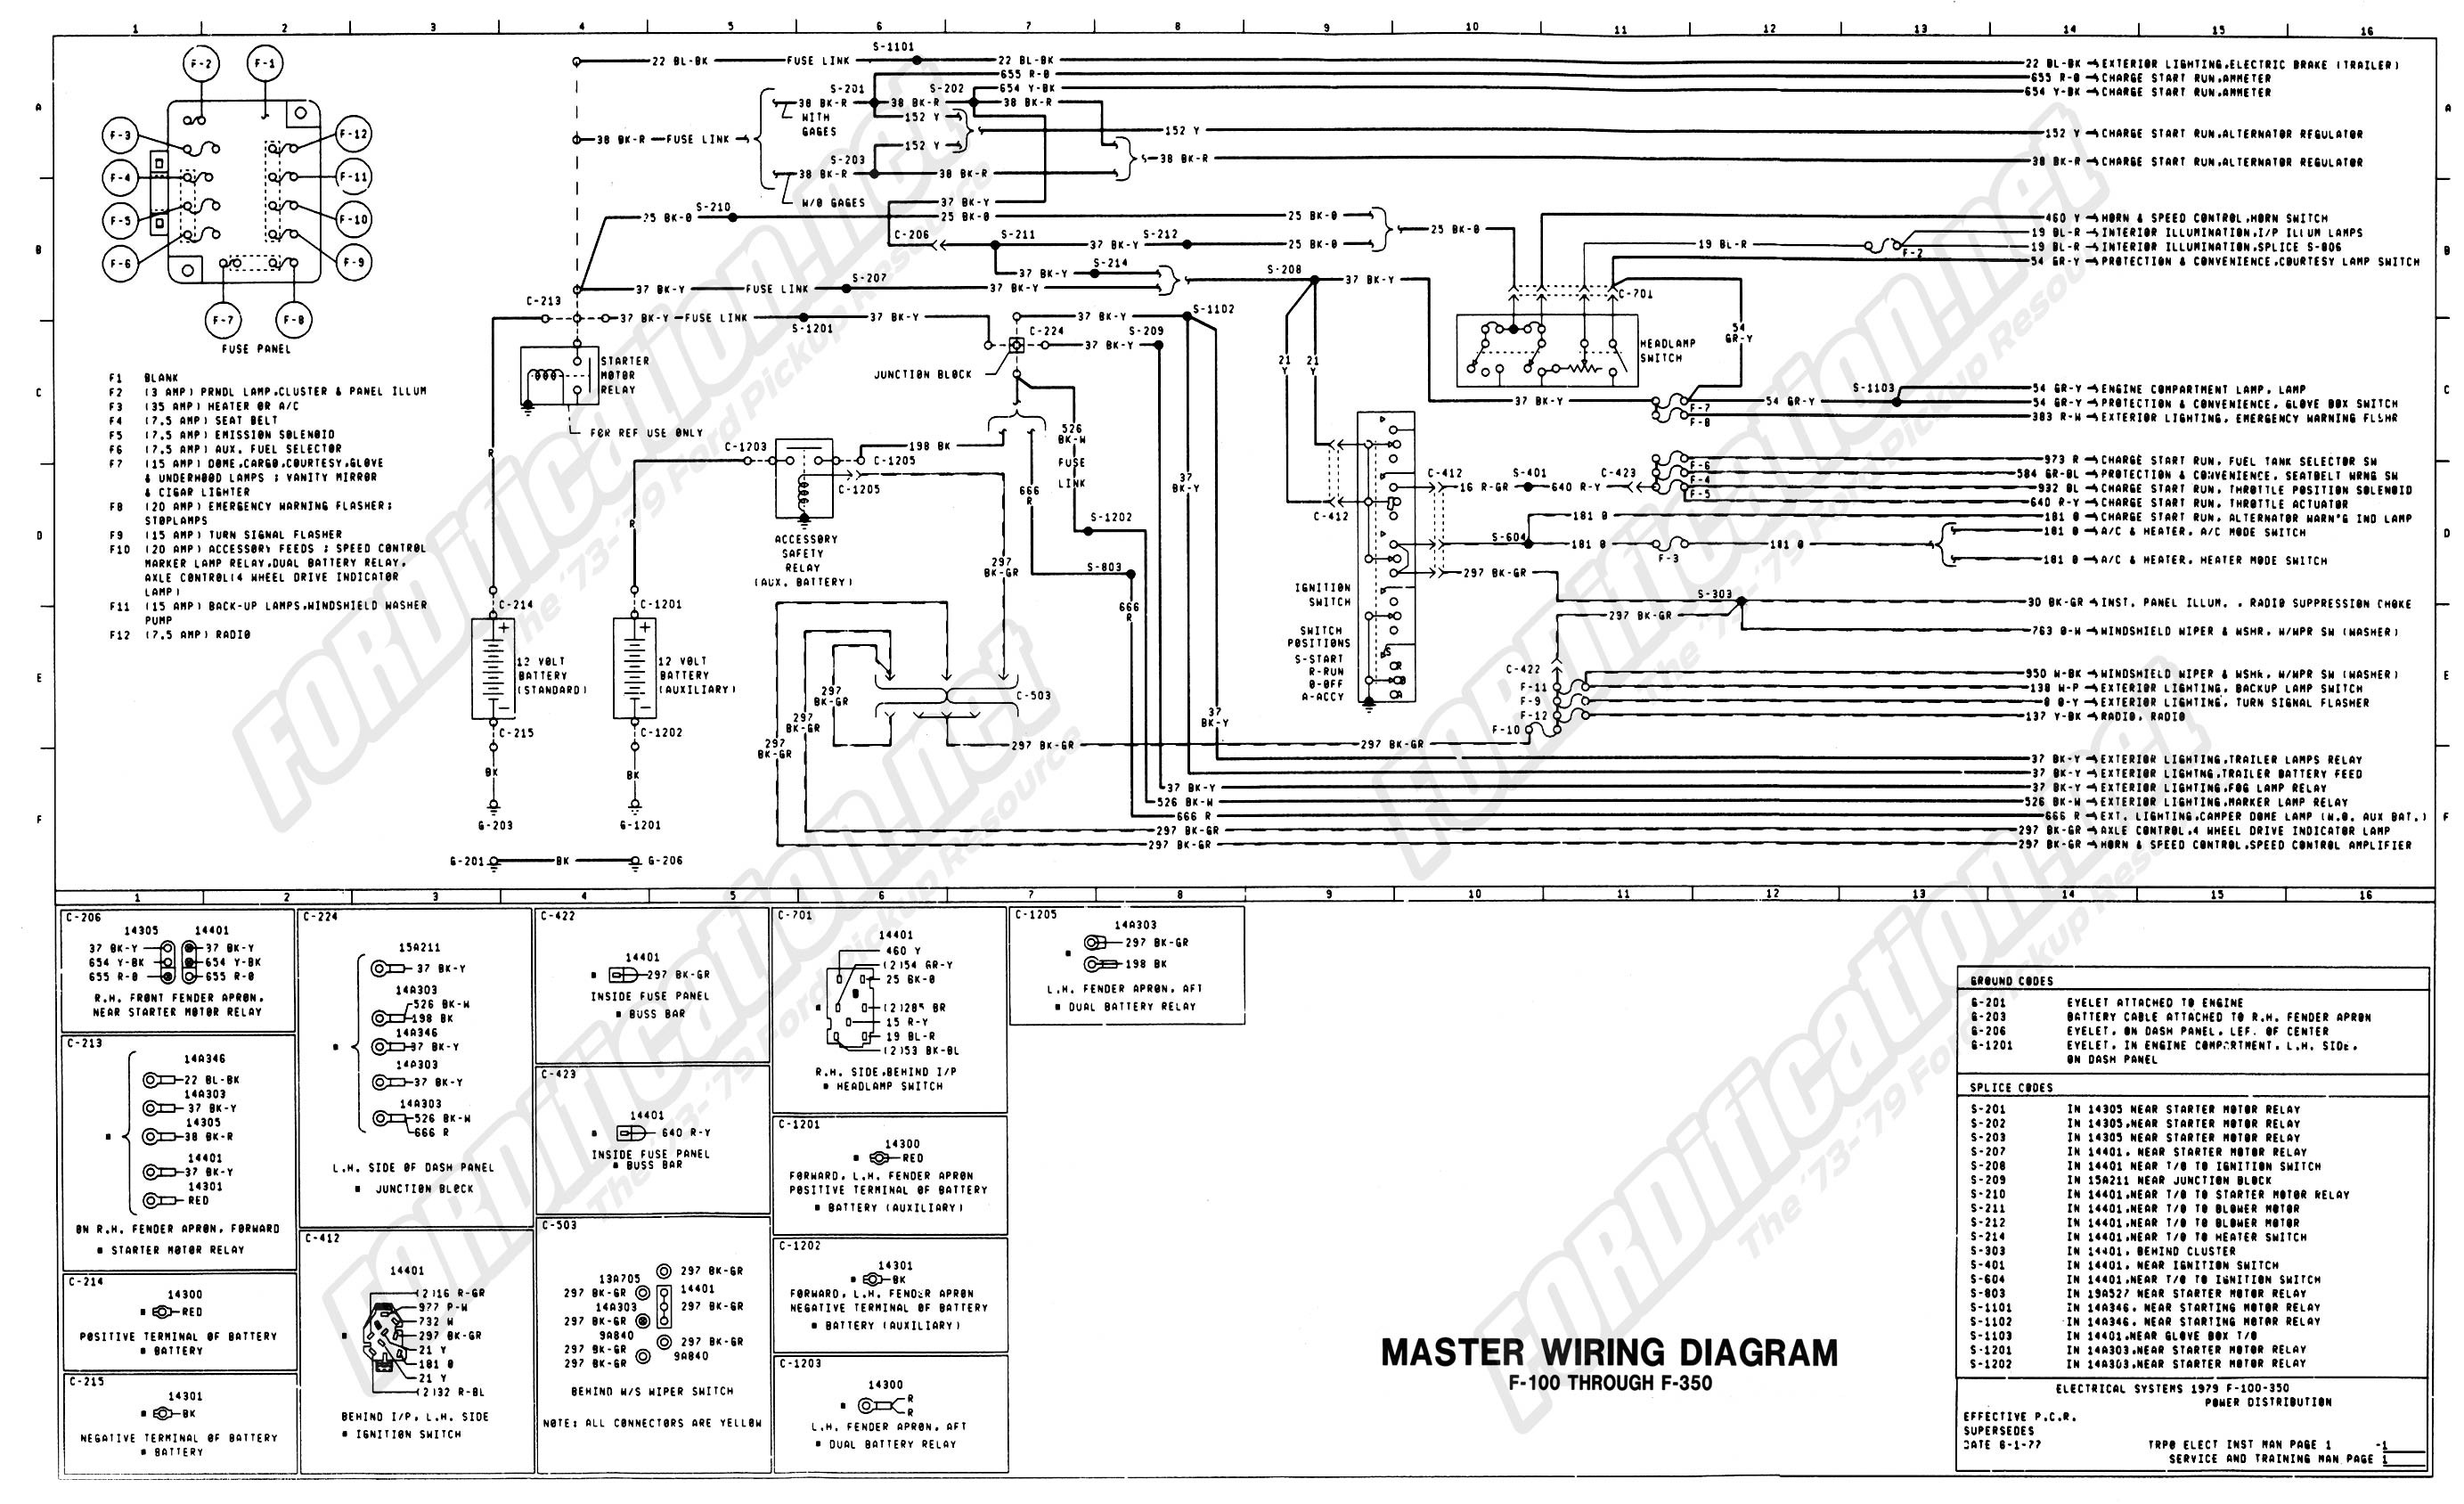 Diagram Wiring Ford Alternator Wiring Diagram Schematic Brake Light Ignition Switch Turn Signal Tractor Lukaszmira Saving 1967 Ford F100 Wiring